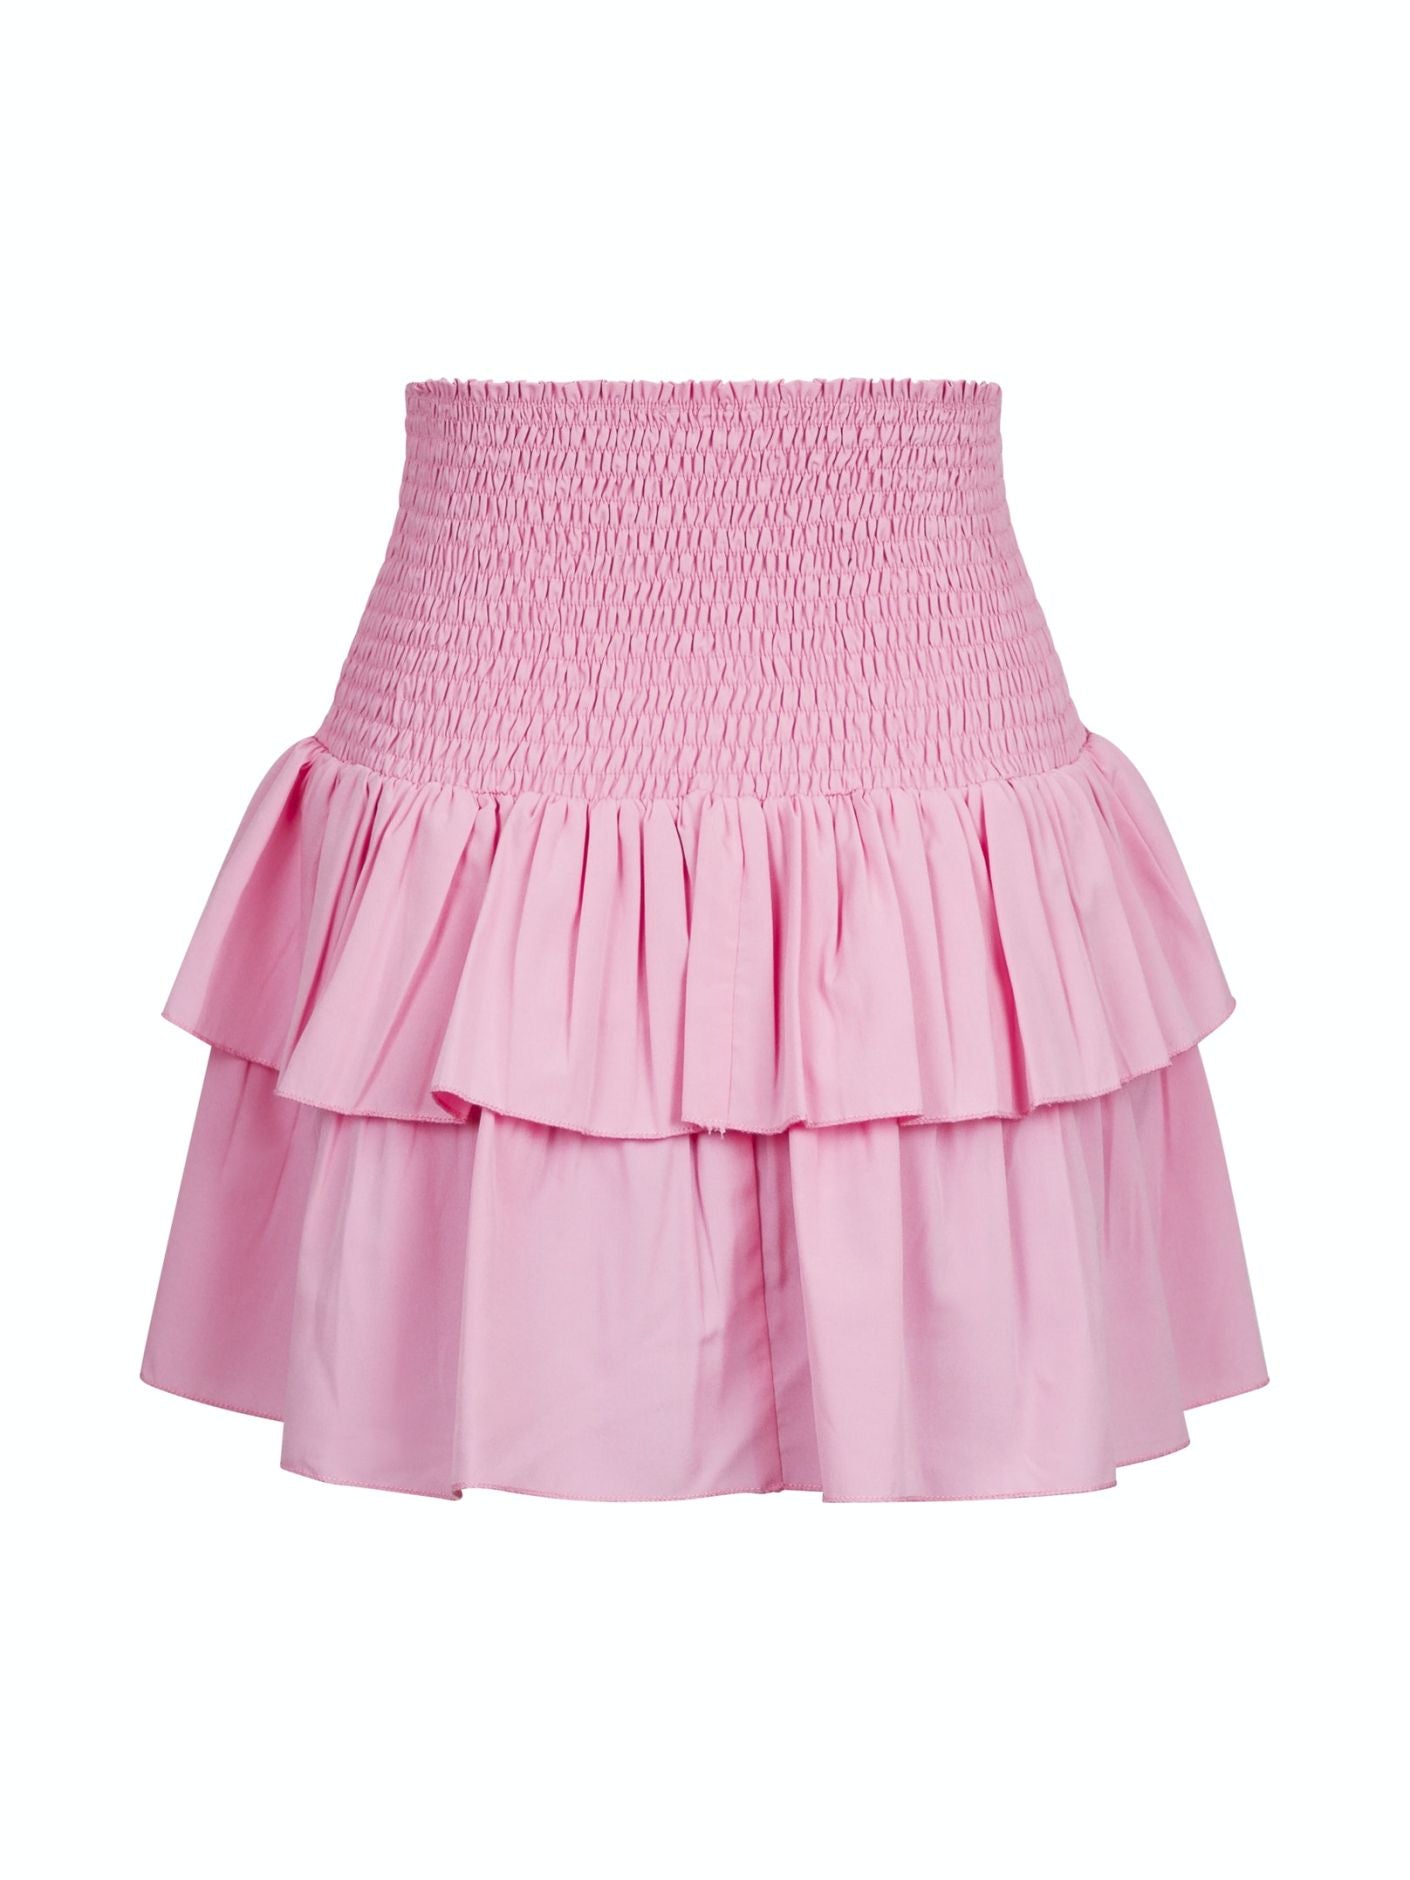 Carin R Skirt Pink